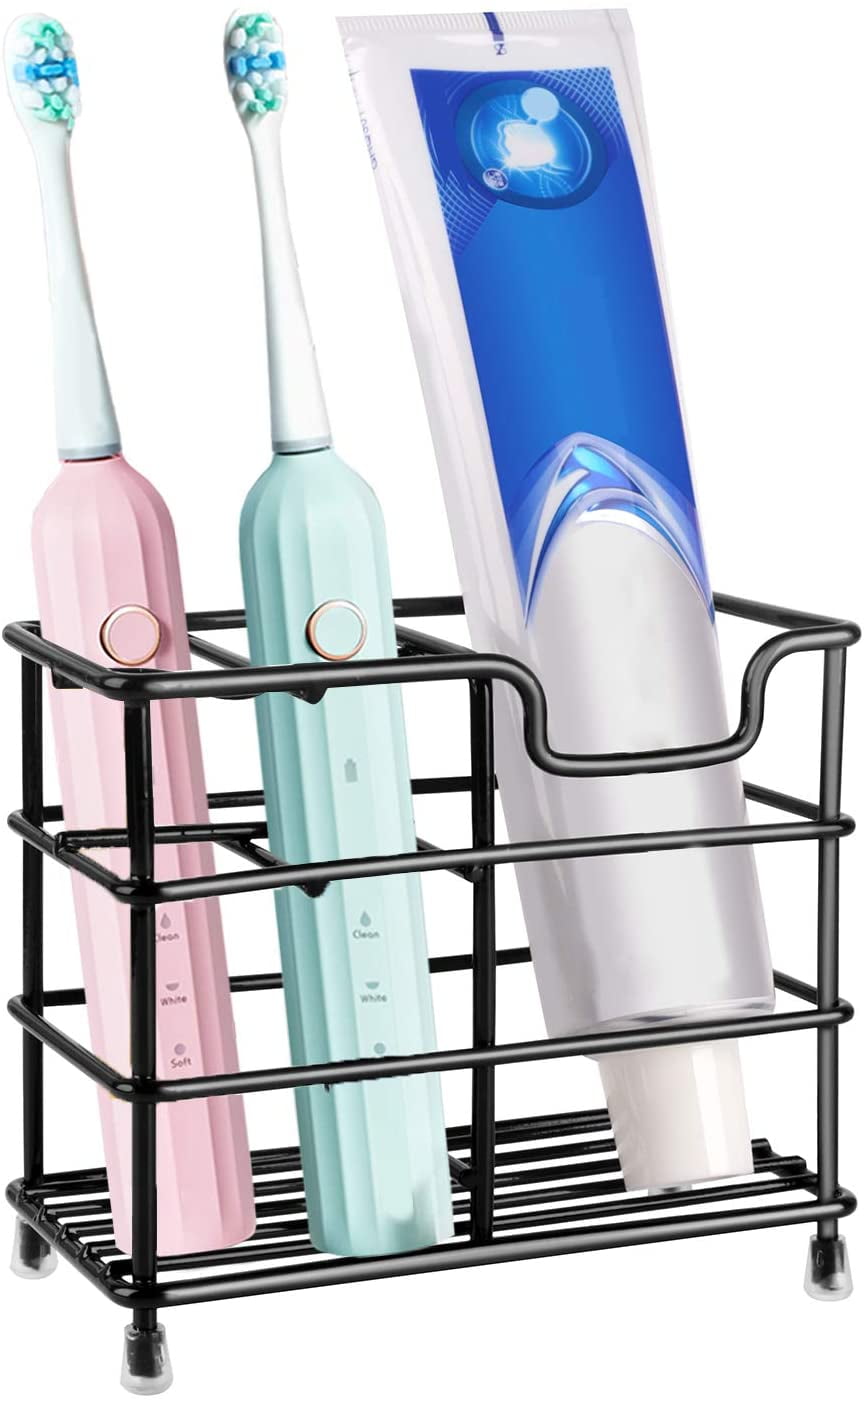 Bathroom Stainless Steel Toothbrush Holder Wall Mount Rack Toothpaste Hang L 